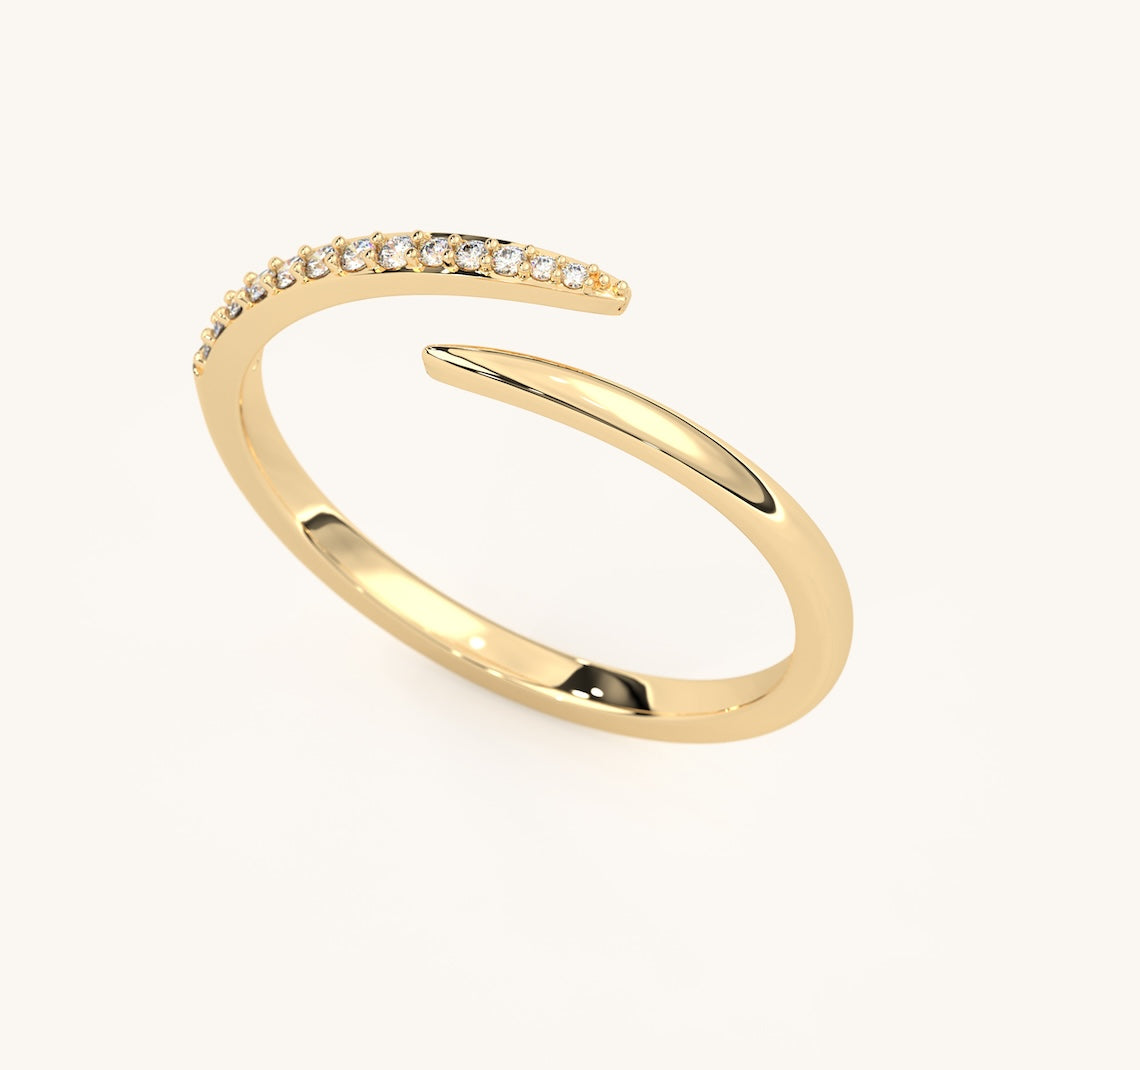 14k Gold Vermeil Spiral Ring With Diamond